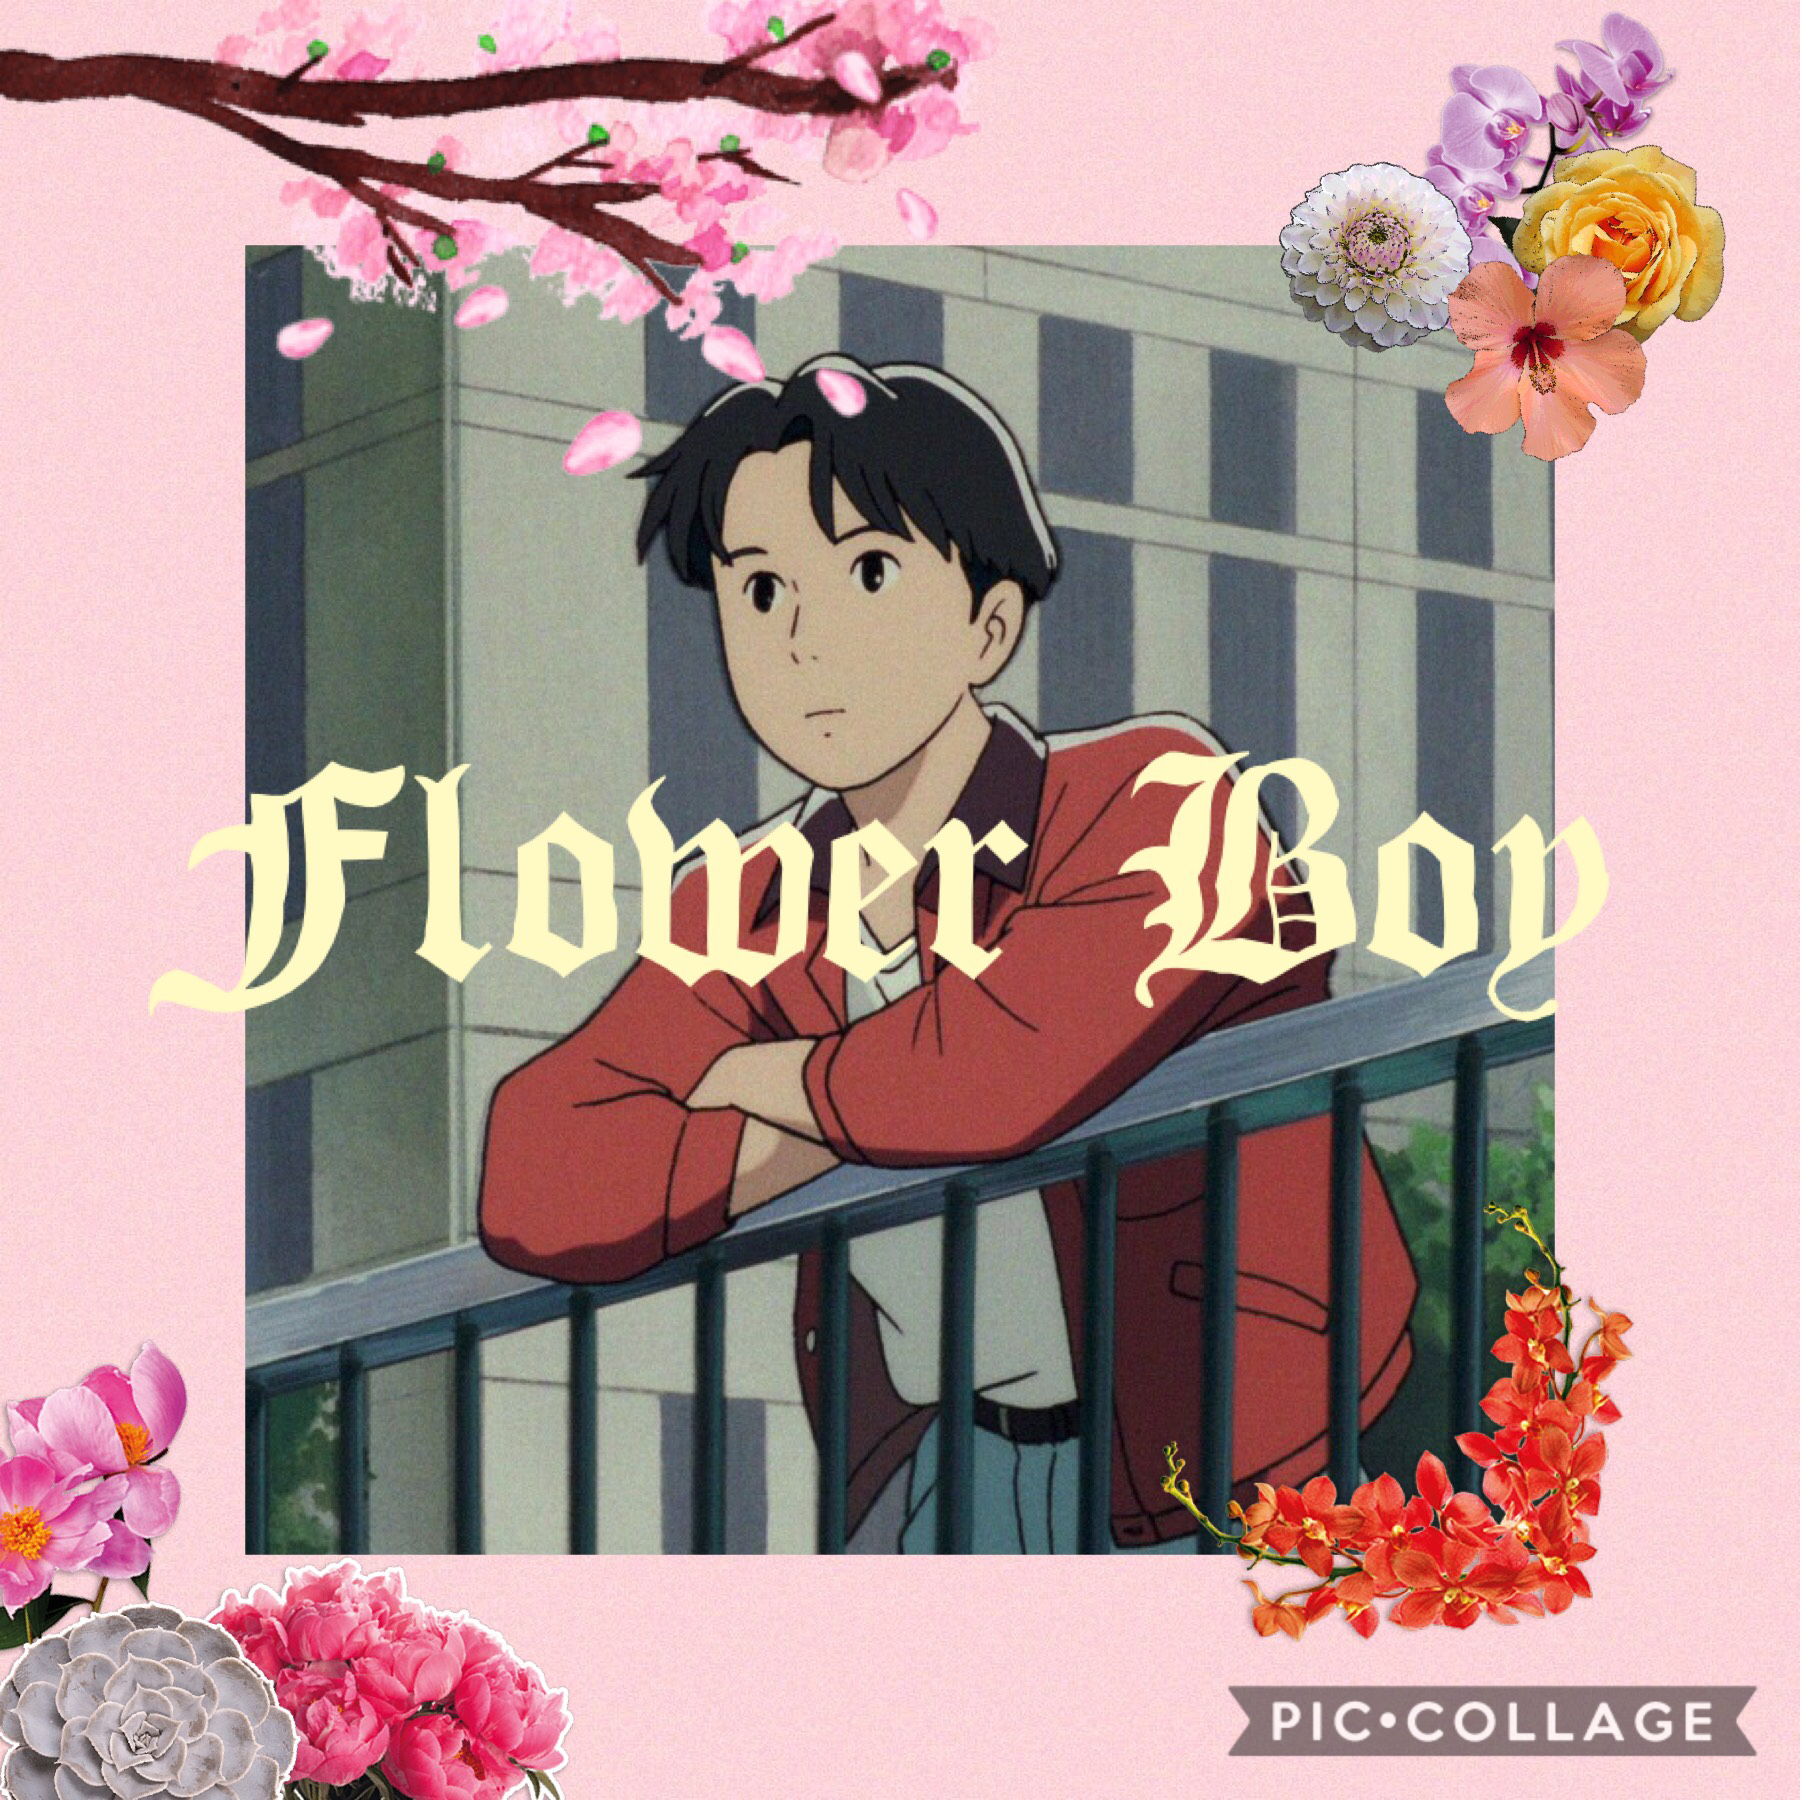 Flower boy 🌸 🌺🌹 